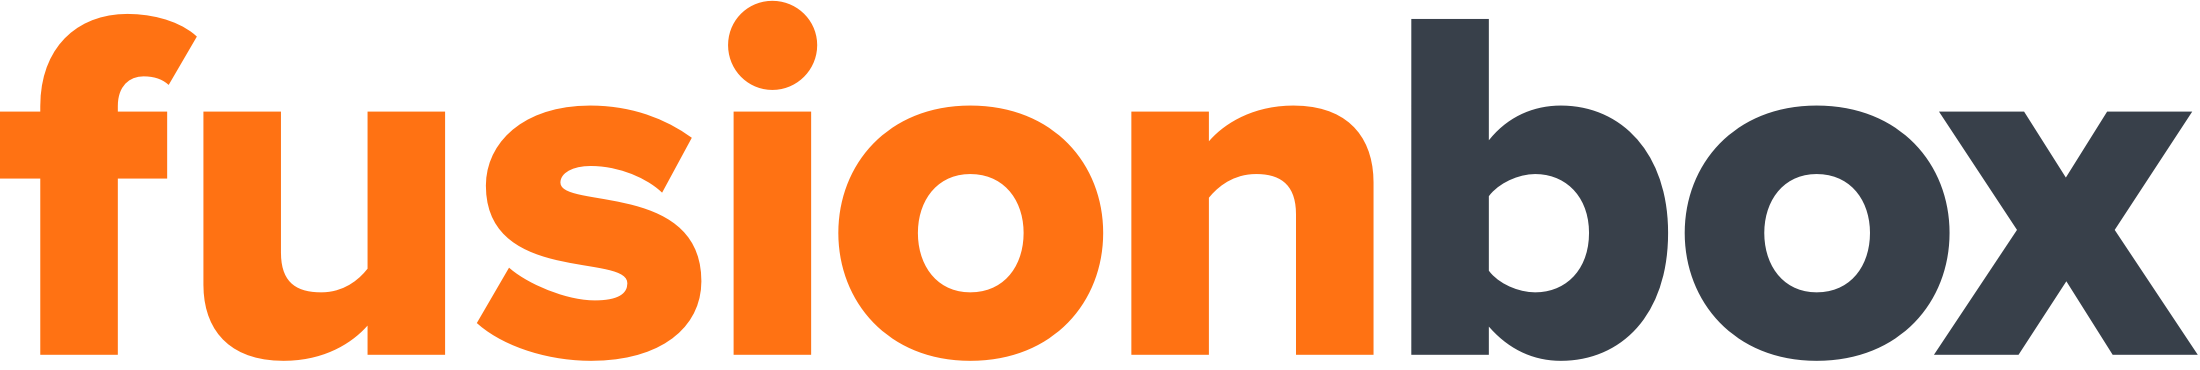 Fusionbox logo